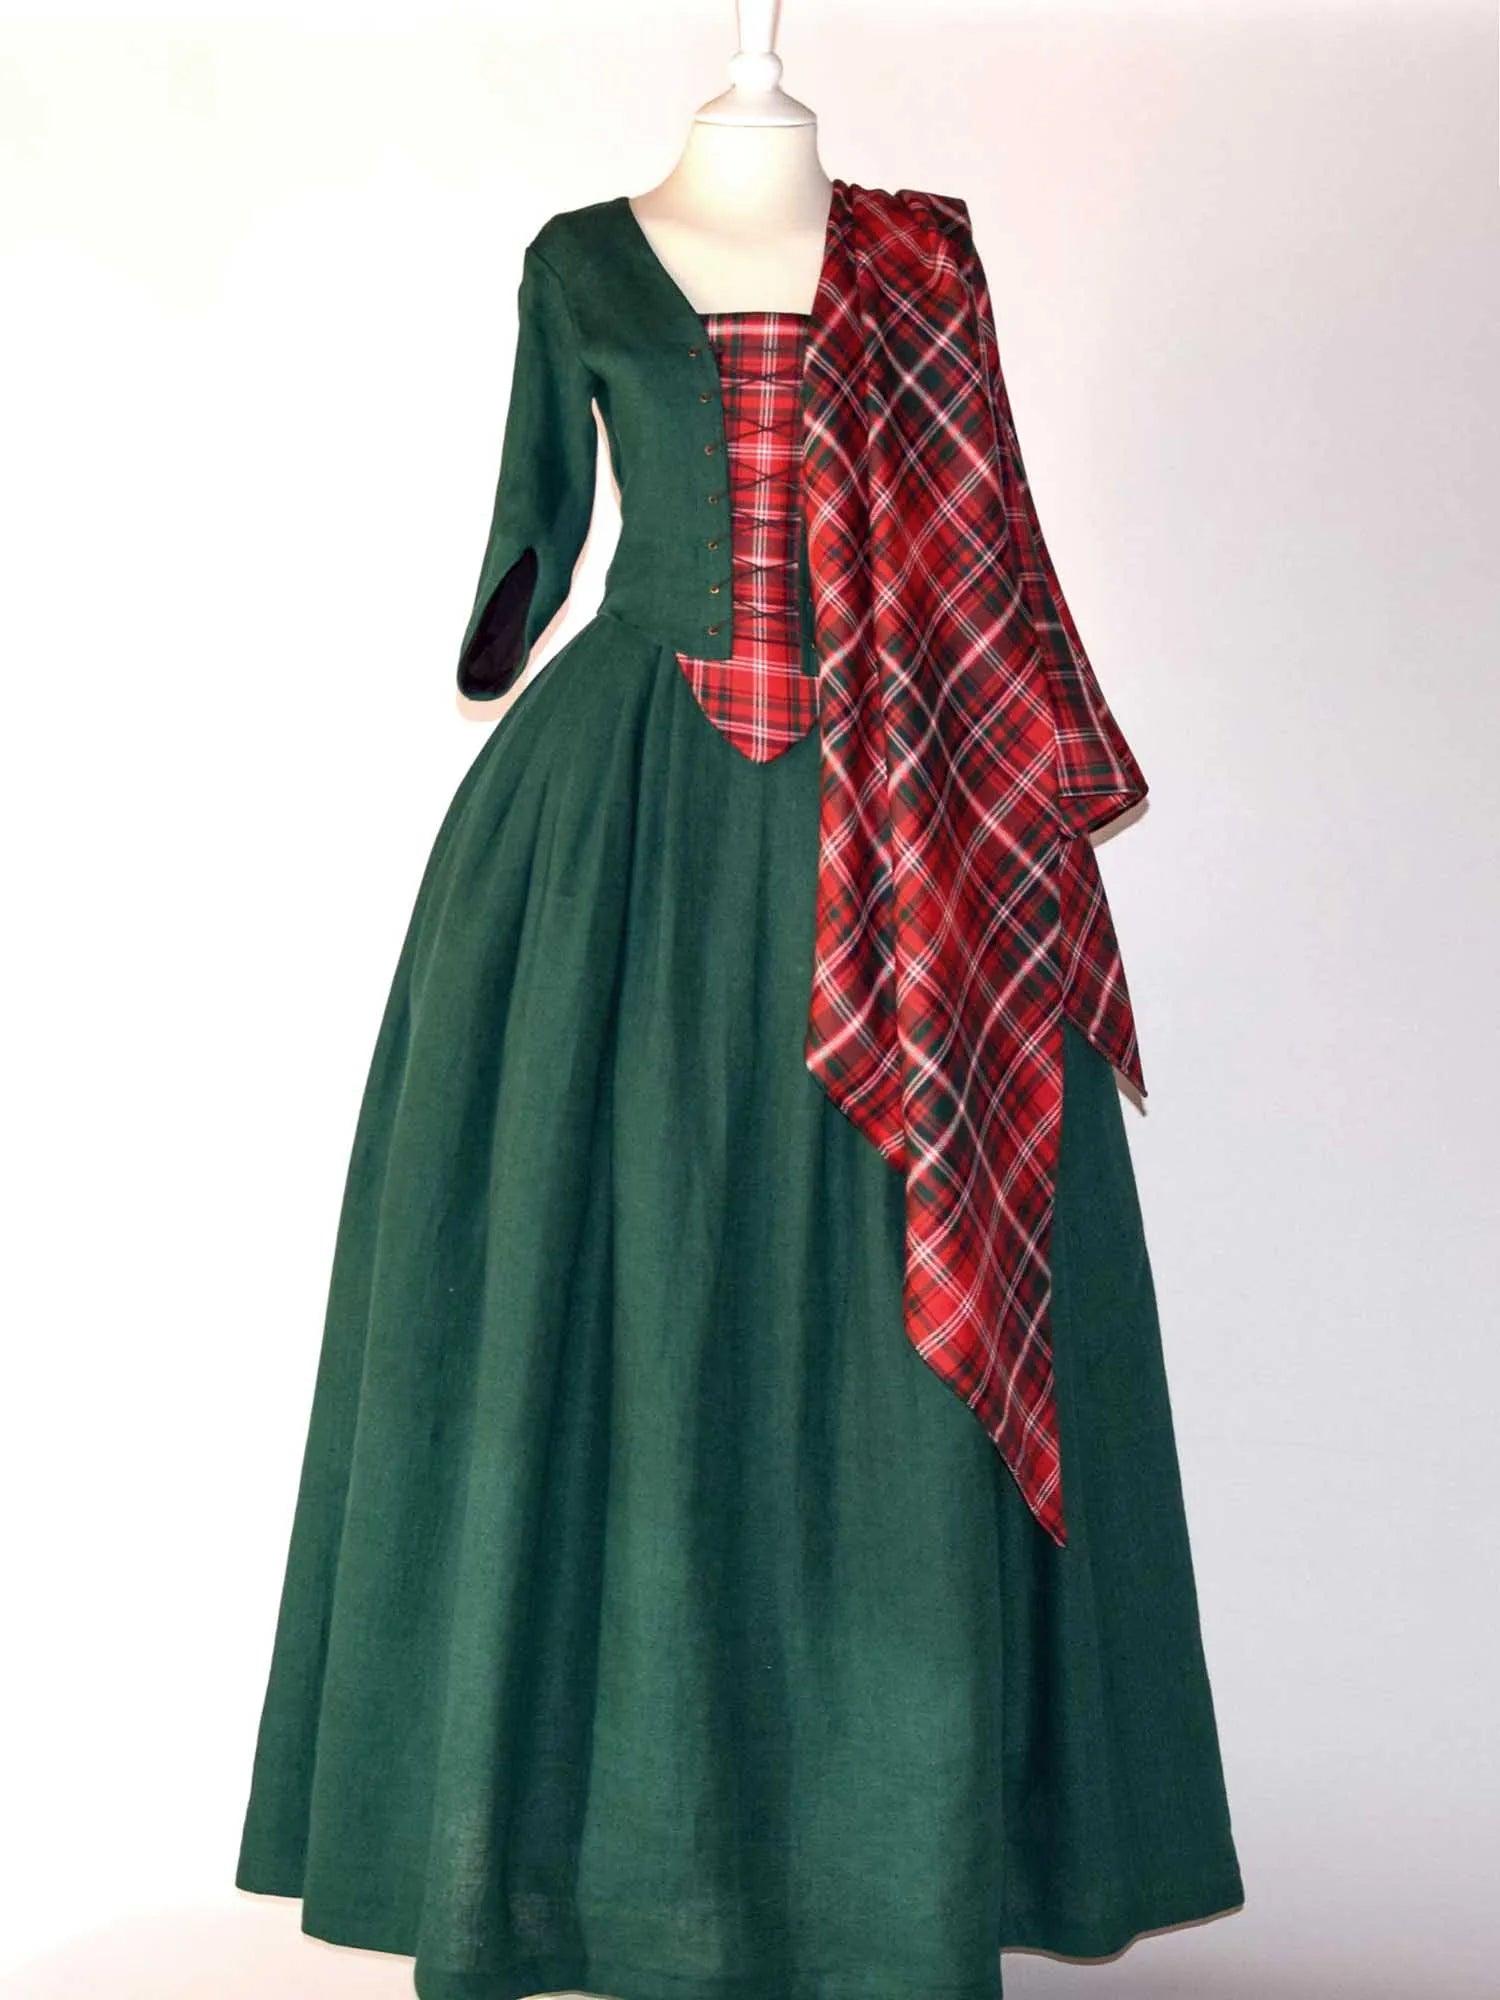 Historical Costume in Dark Green Linen and MacDougall Tartan Shawl - Atelier Serraspina